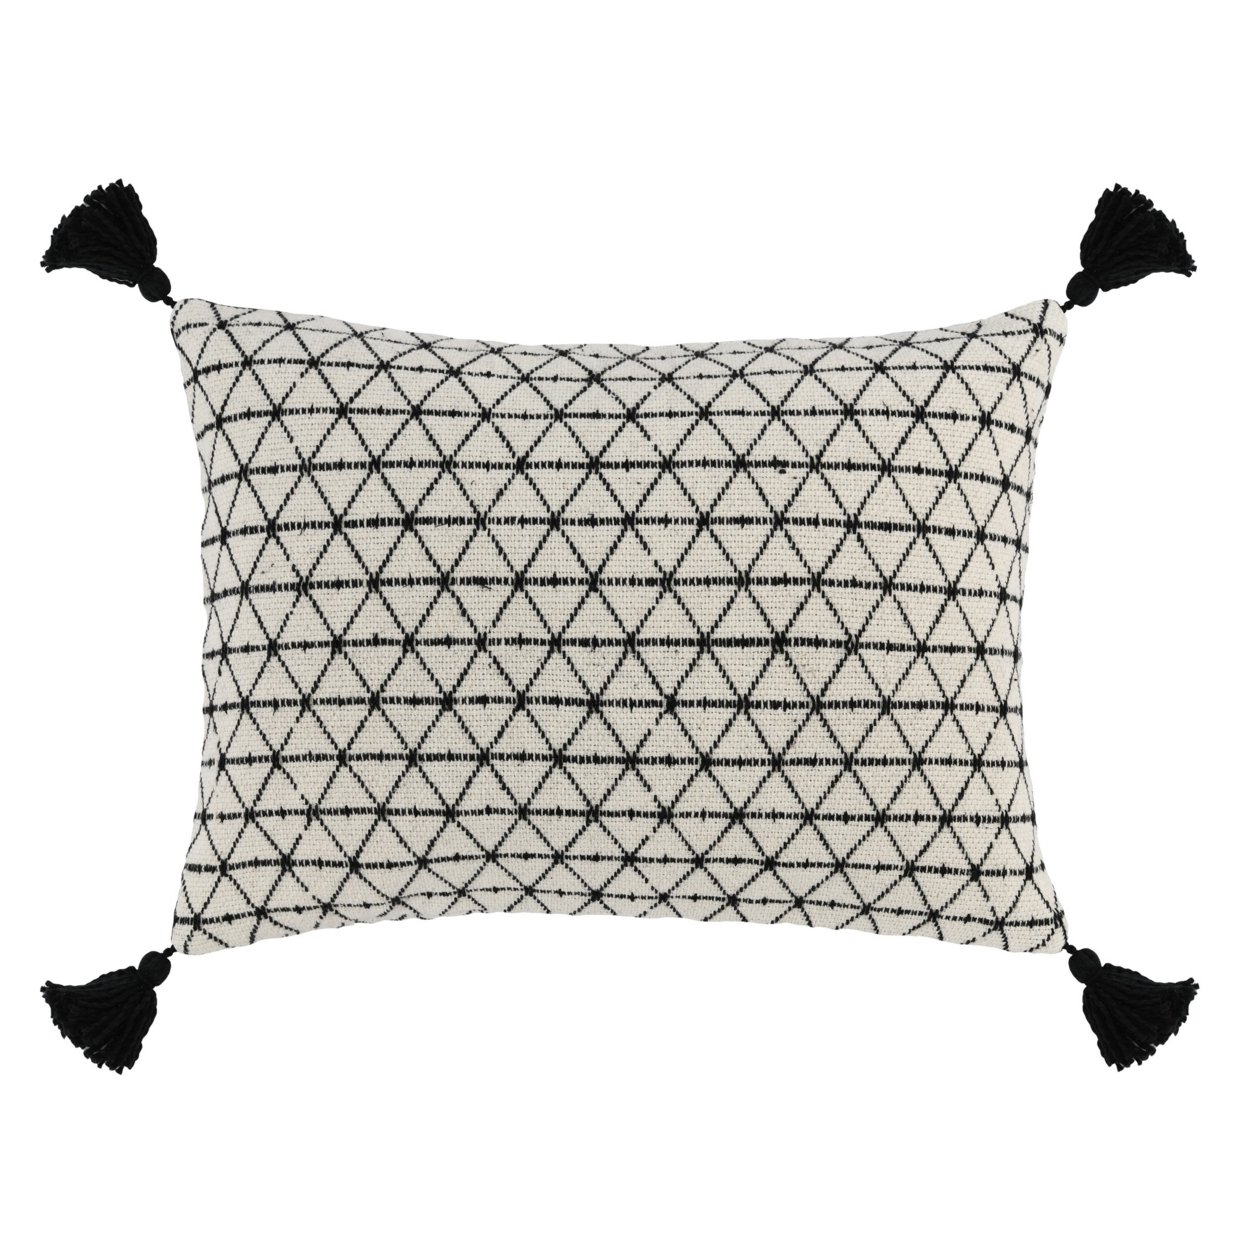 18 X 20 Inch Accent Throw Pillow, Woven Lined Design, Tassels, White, Black, Saltoro Sherpi